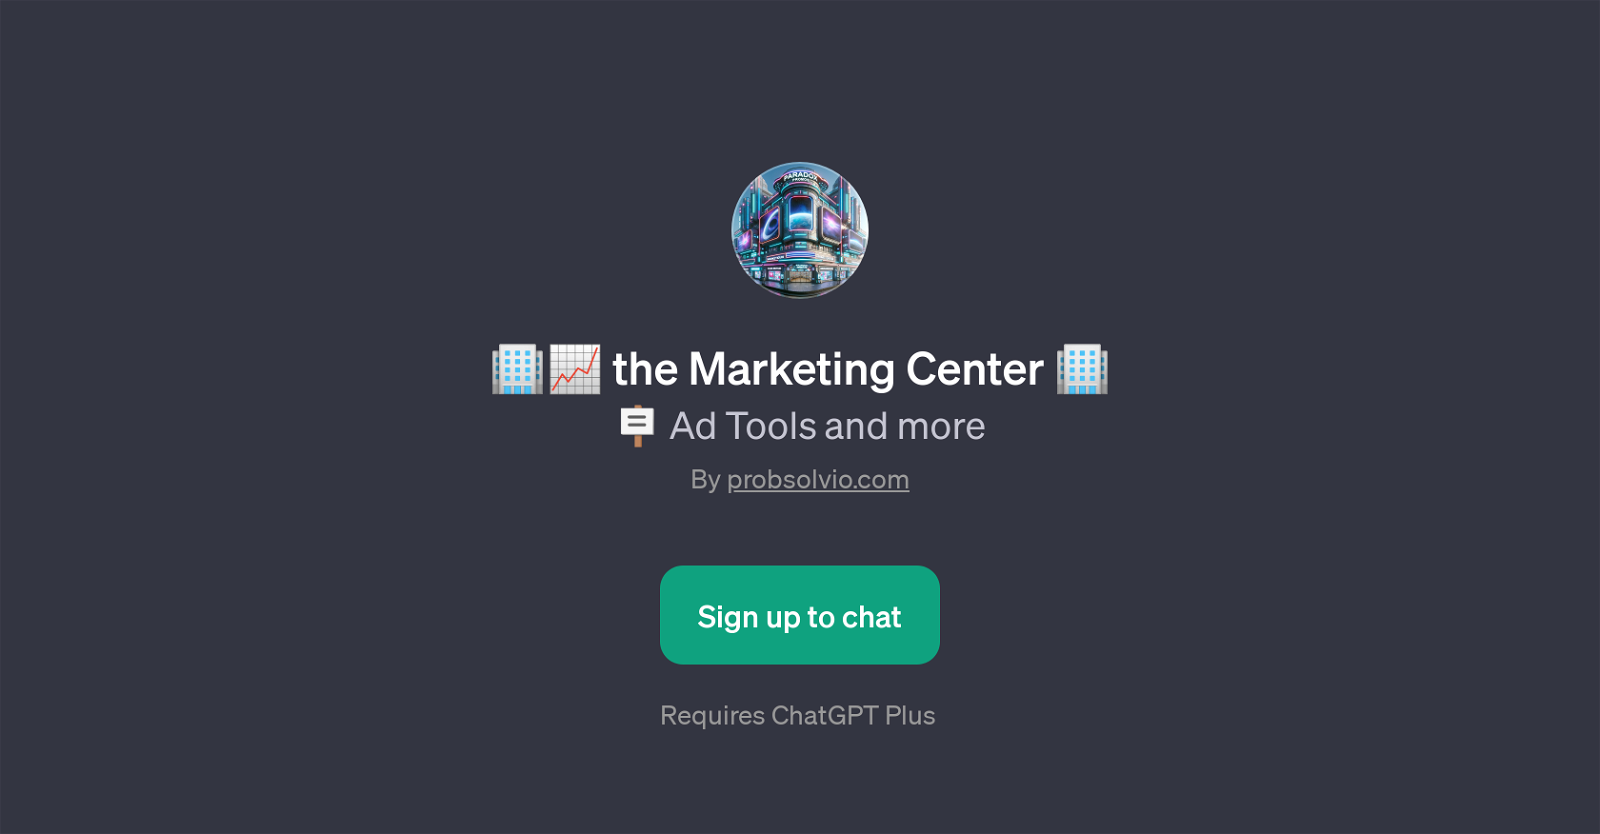 the Marketing Center website